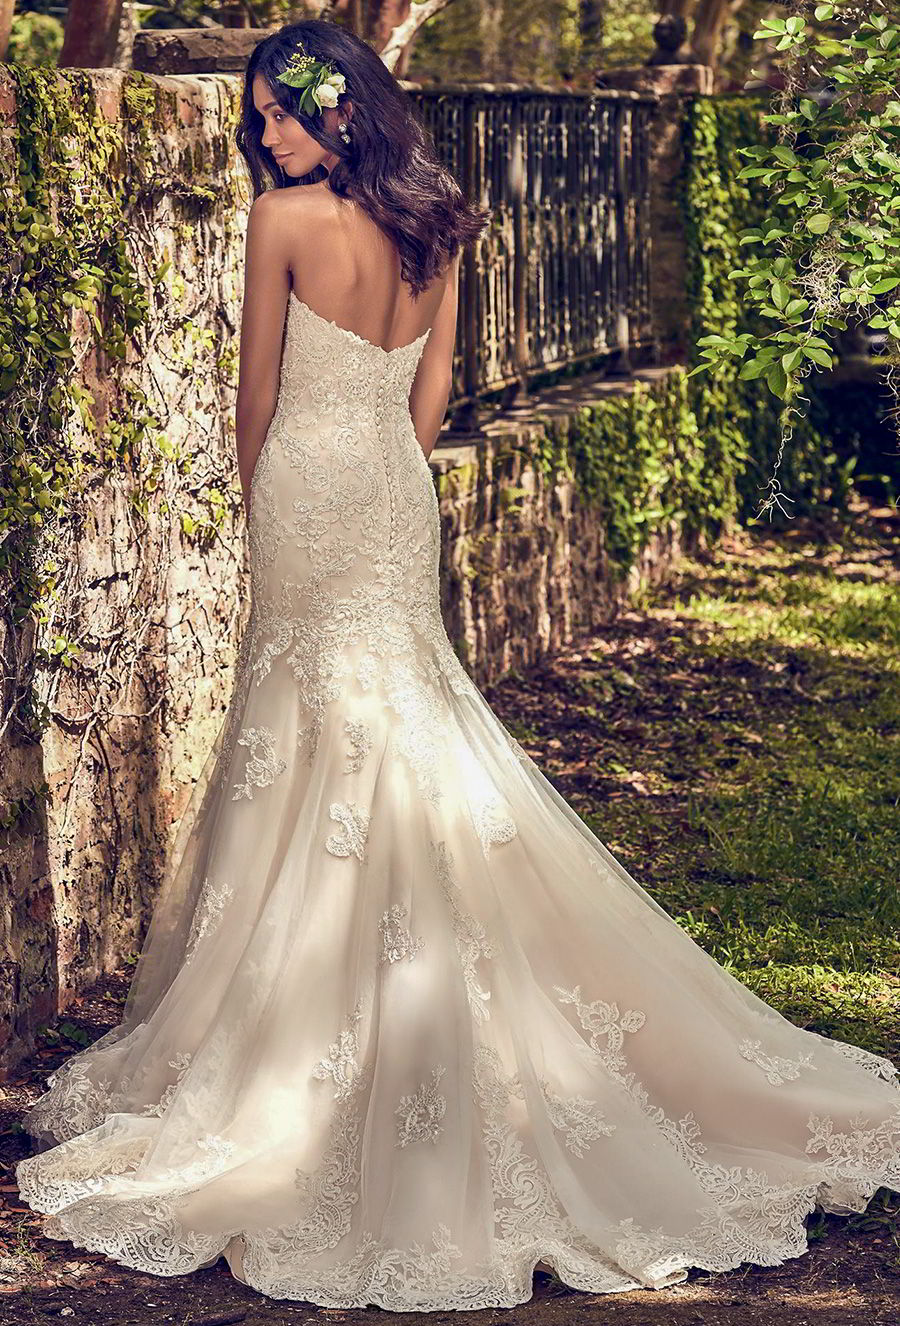 maggie sottero 2018 gold dress (saige) strapless sweetheart fit flare lace wedding dress light gold color bv elegant